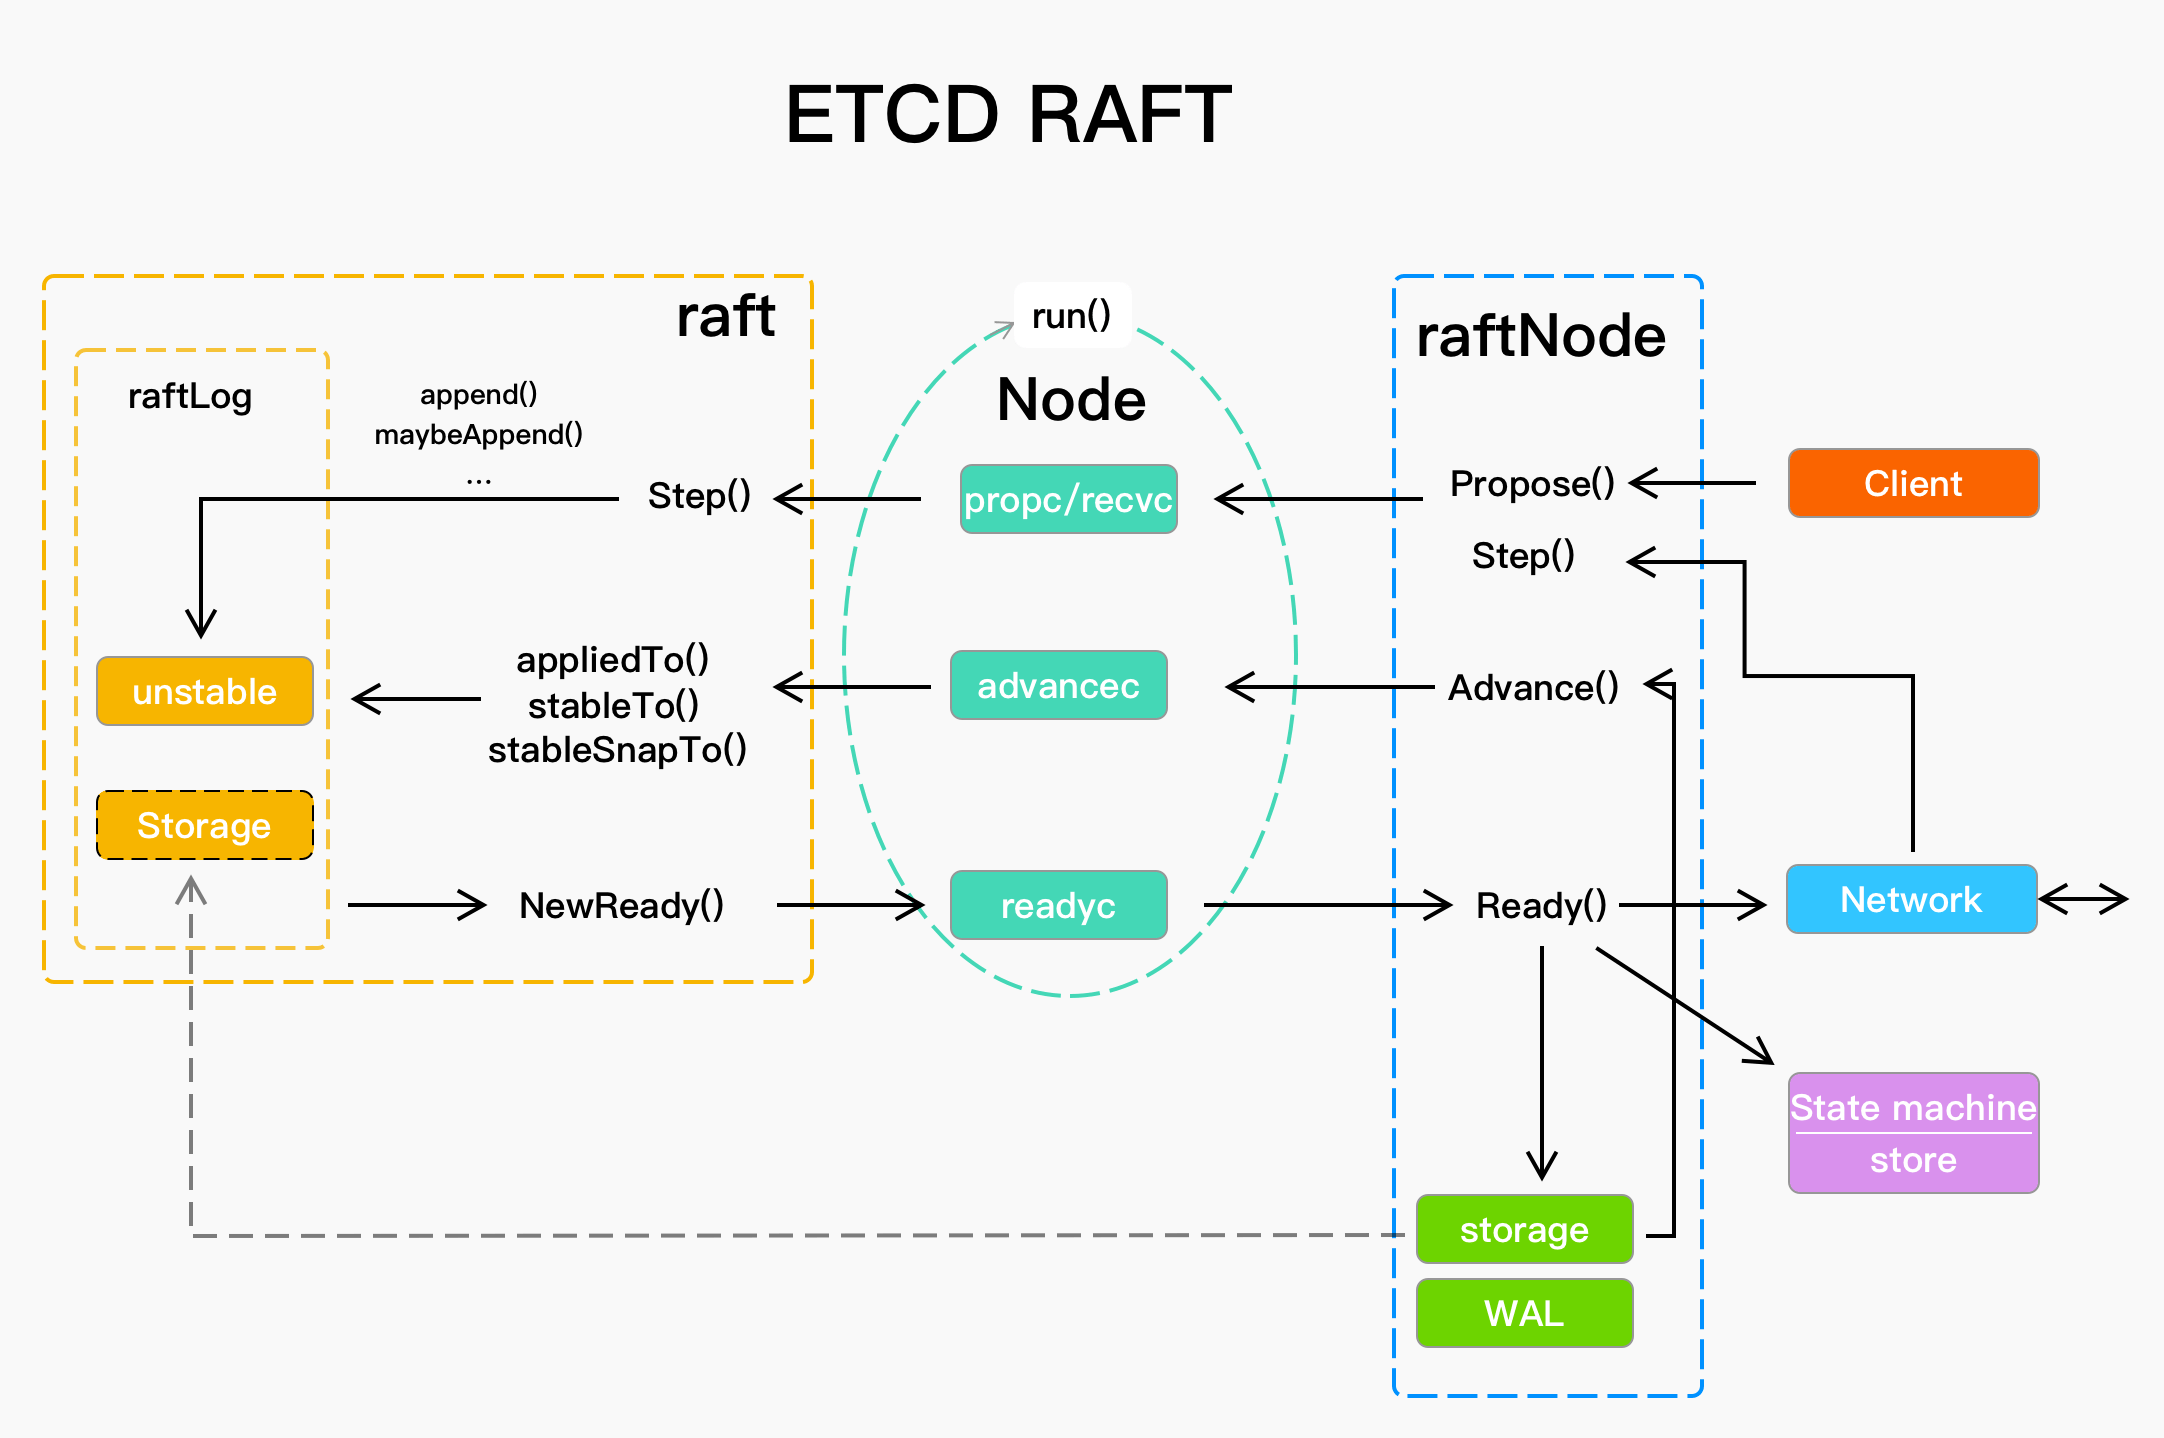 etcd raft workflow